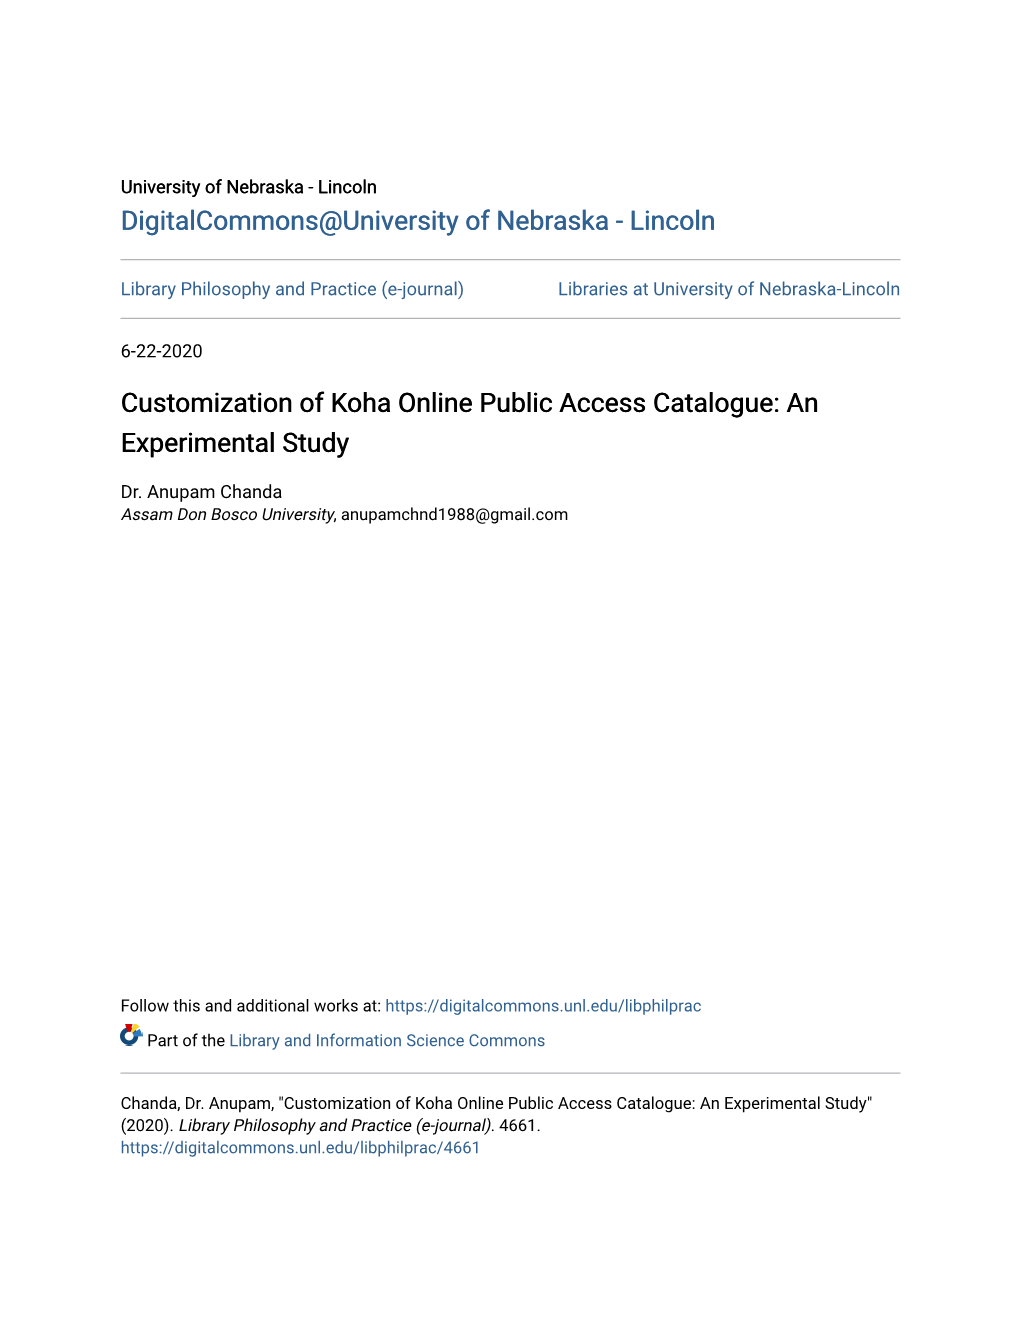 Customization of Koha Online Public Access Catalogue: an Experimental Study